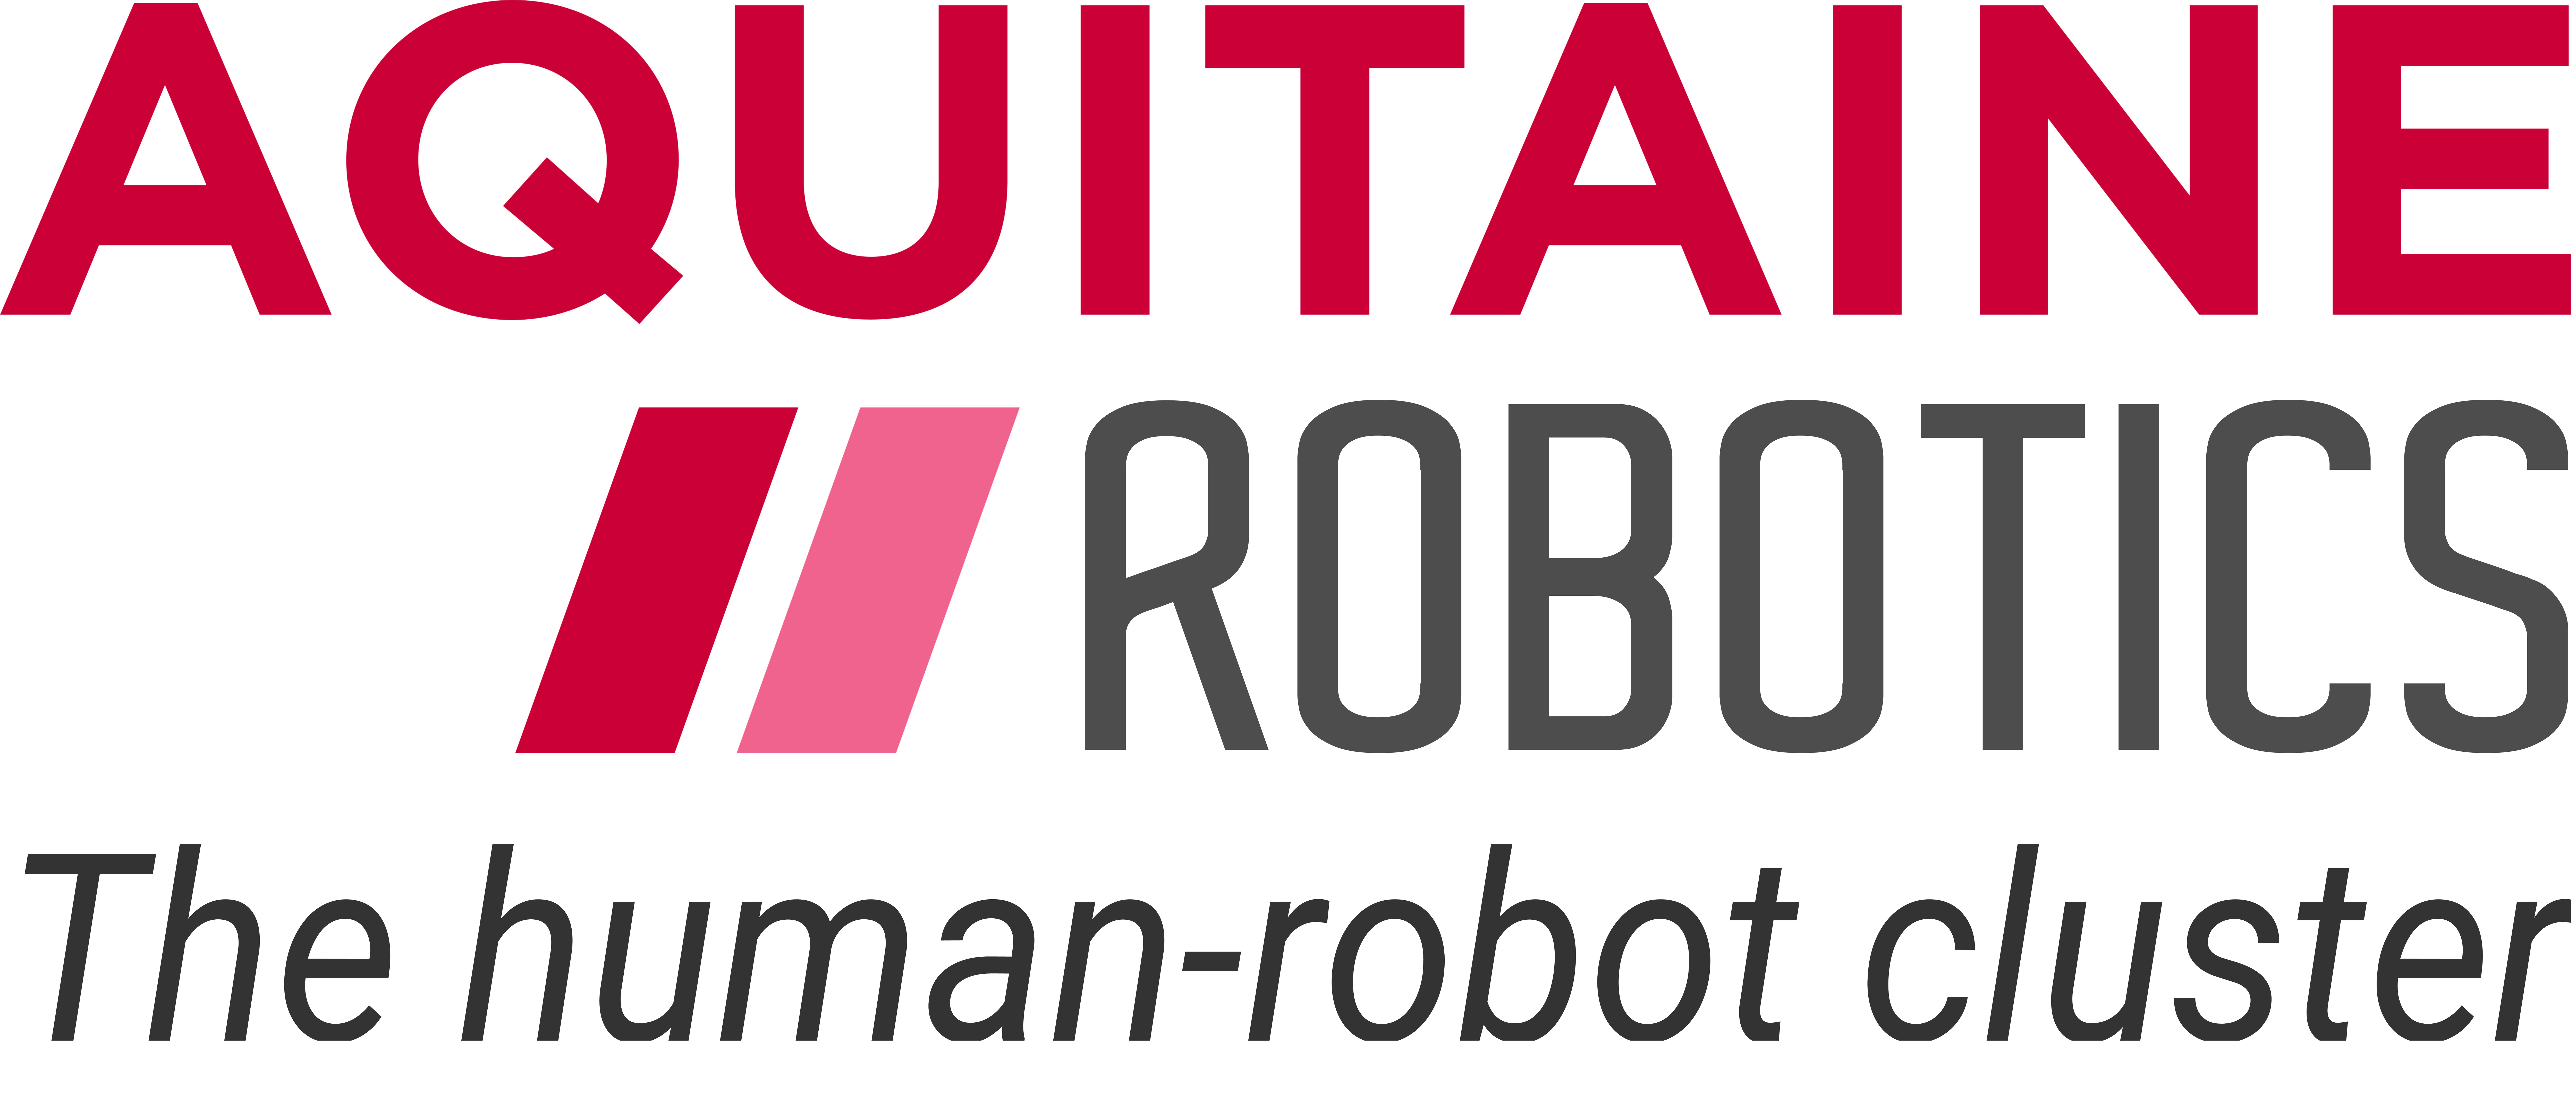 Aquitaine Robotics, The humain-robot cluster